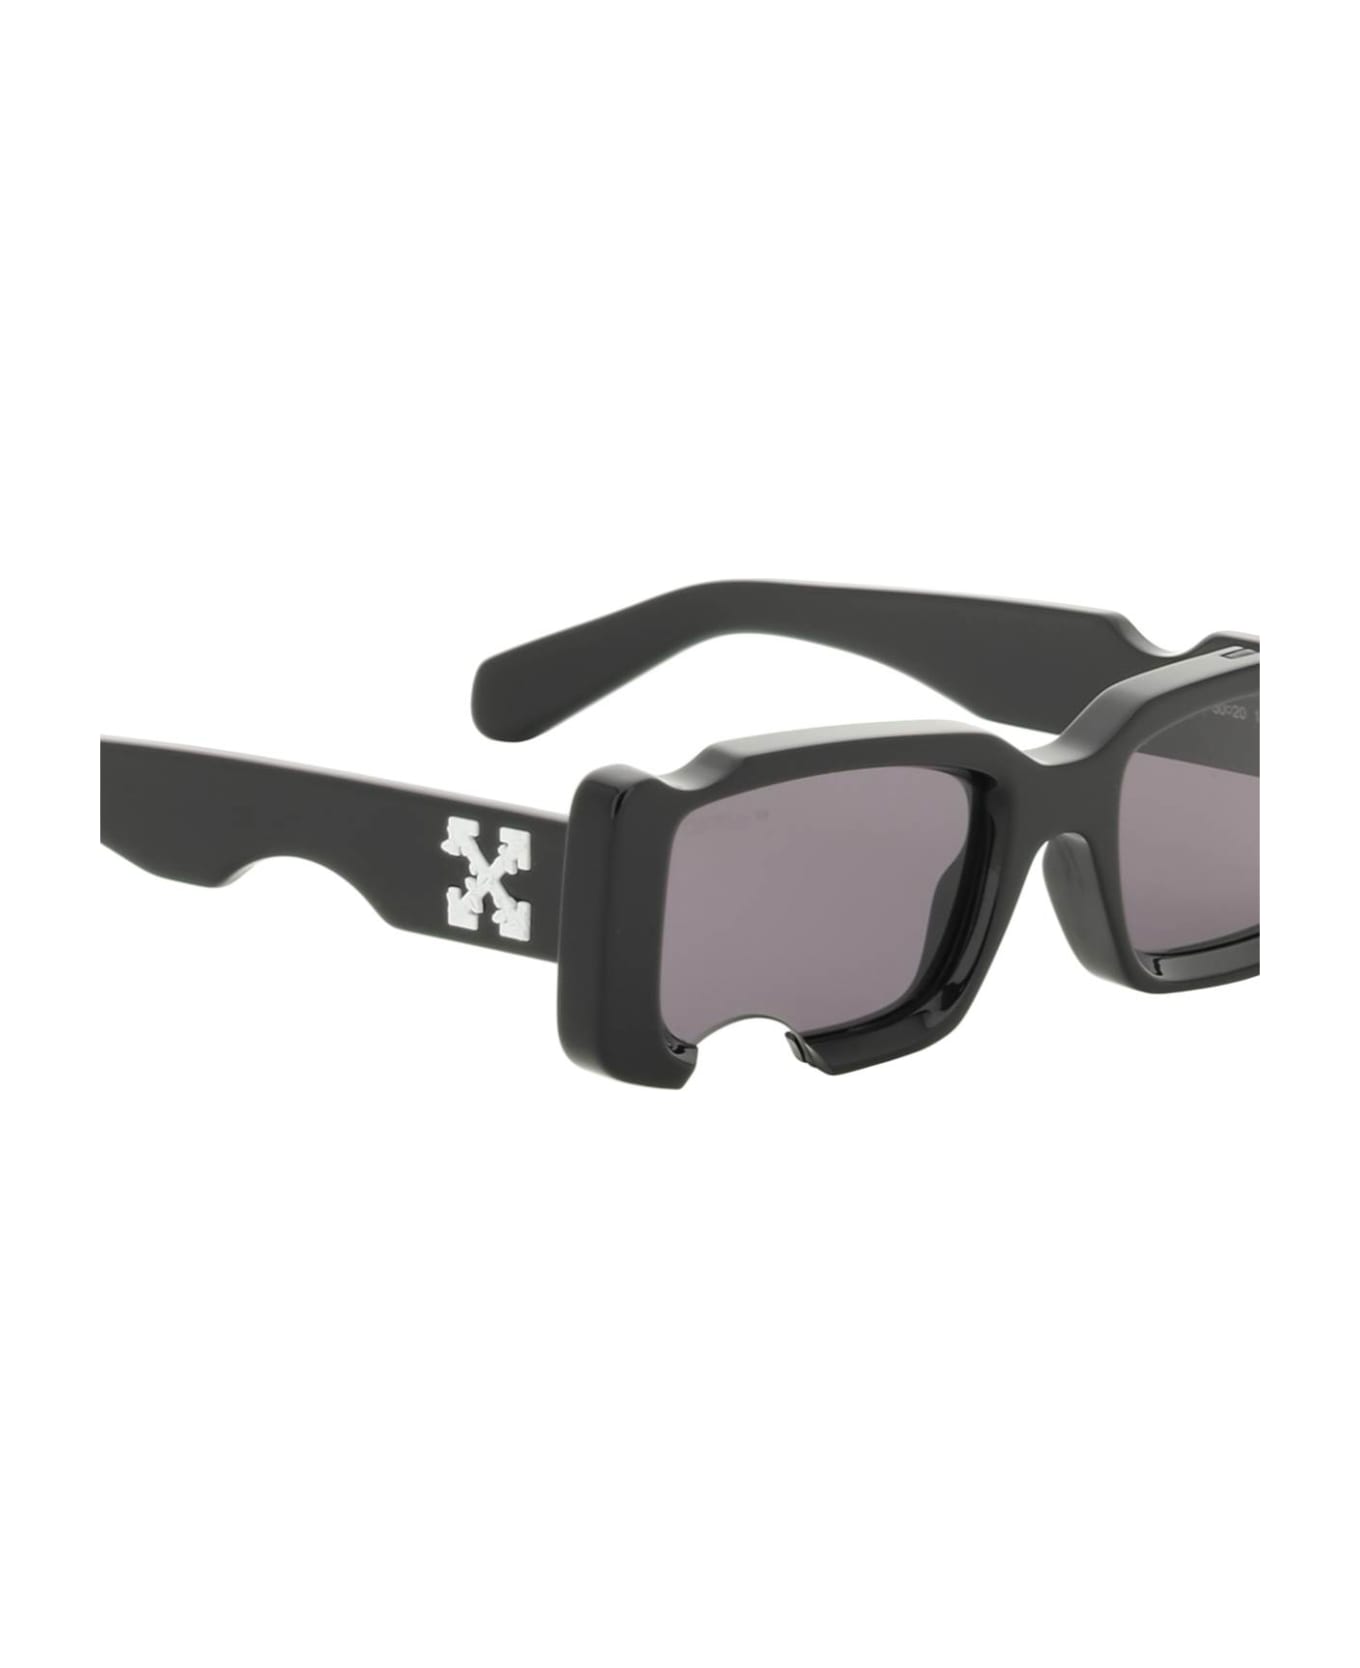 Off-White Cady Sunglasses - BLACK DARK GREY (Black)